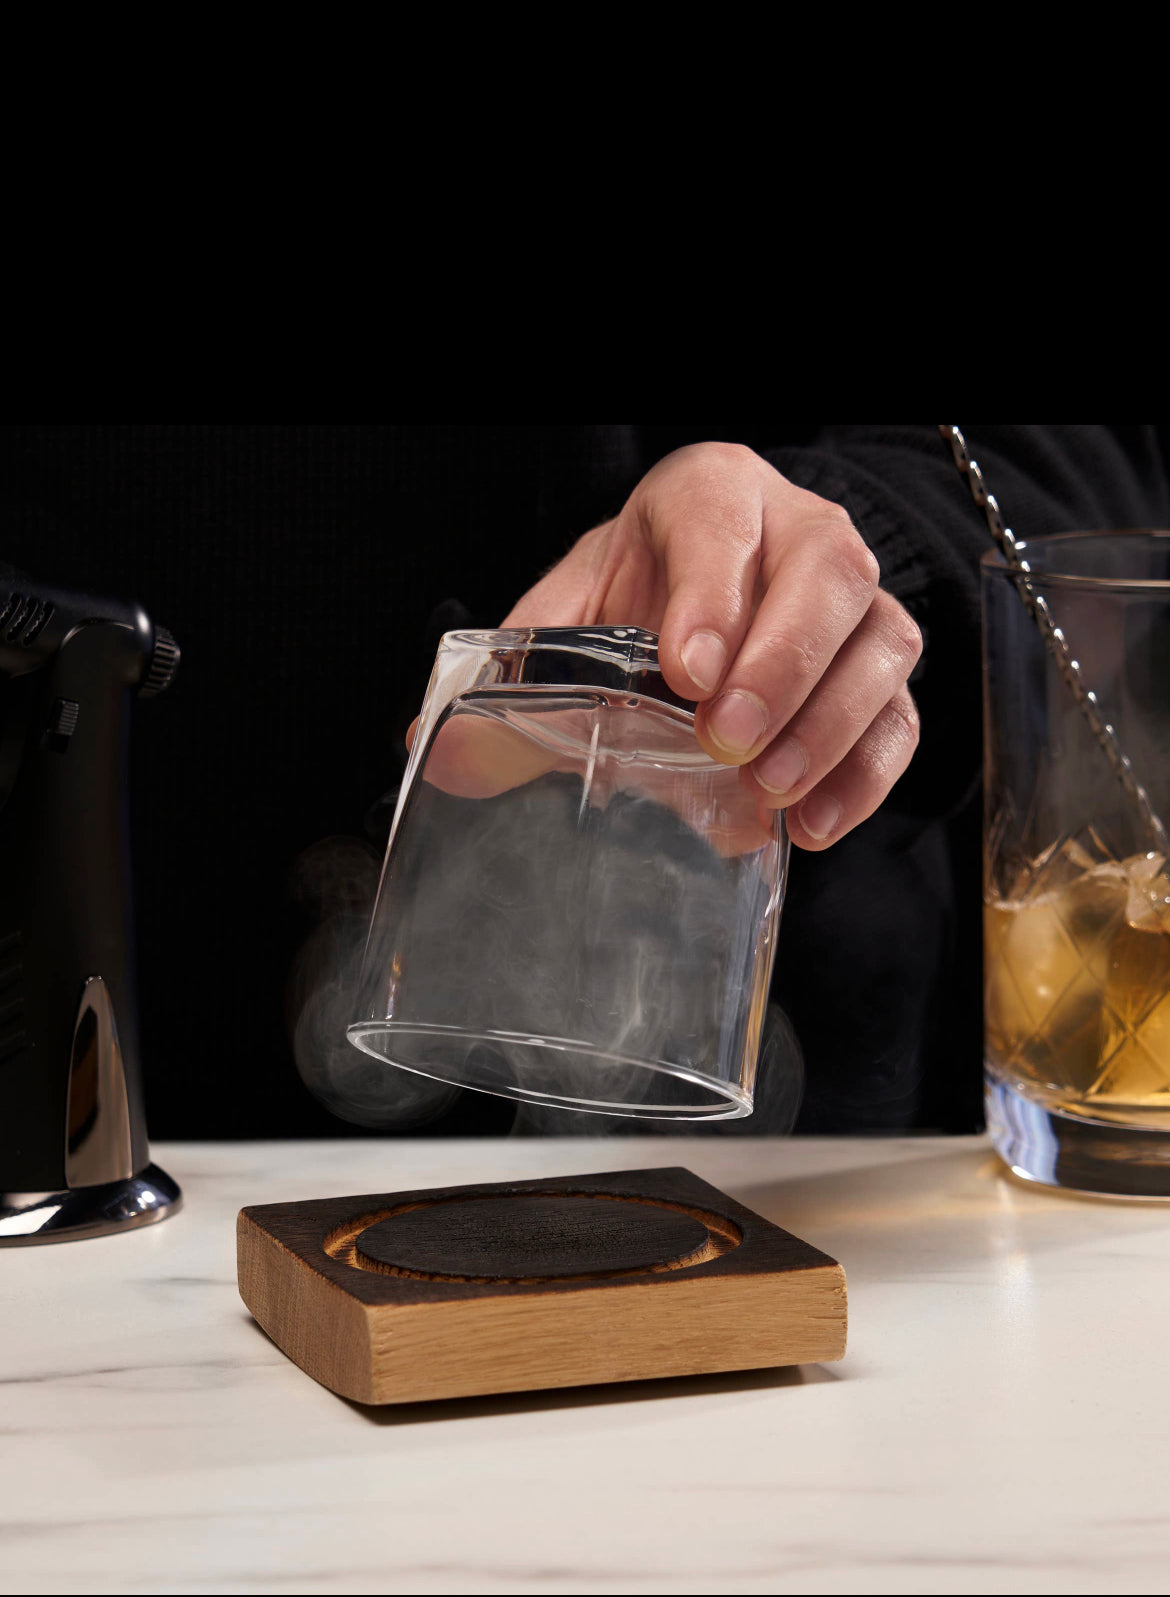 AlchemI Single Serve Smoked Cocktail Kit